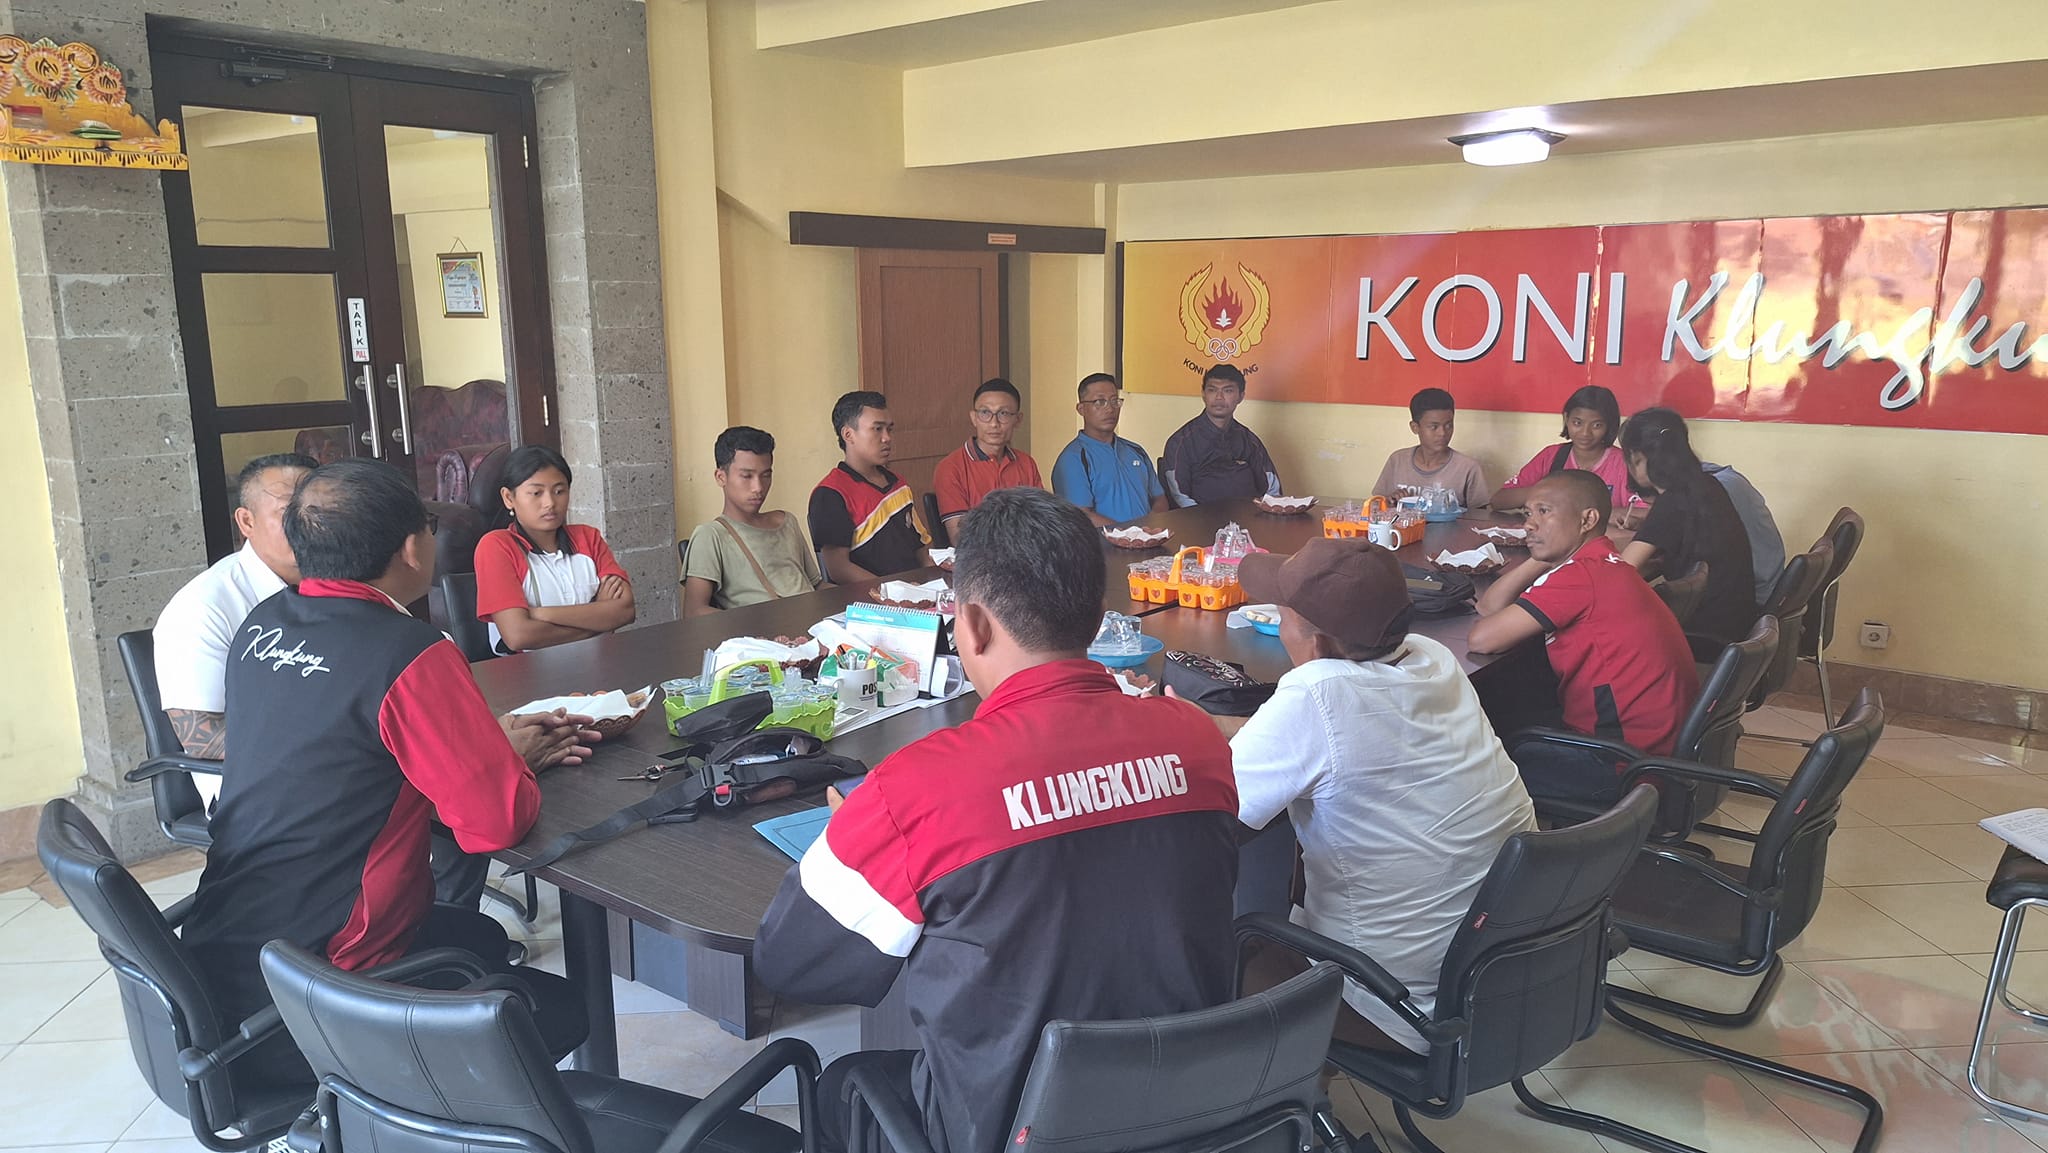 Atlet beserta pendamping NPCI Klungkung bertemu dengan Ketua Koni Klungkung